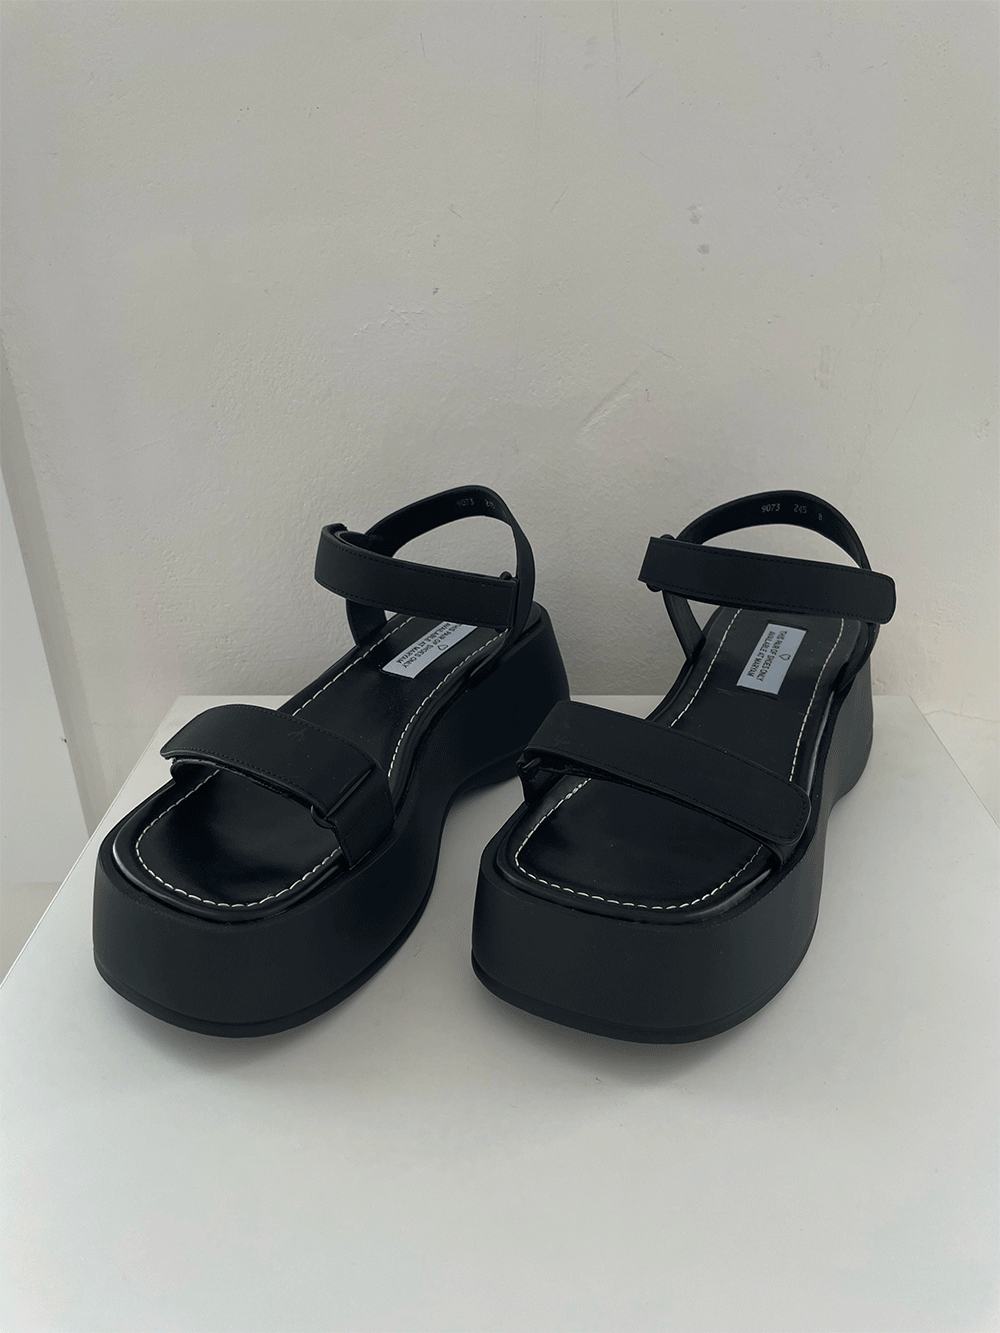 Velcro platform sandals